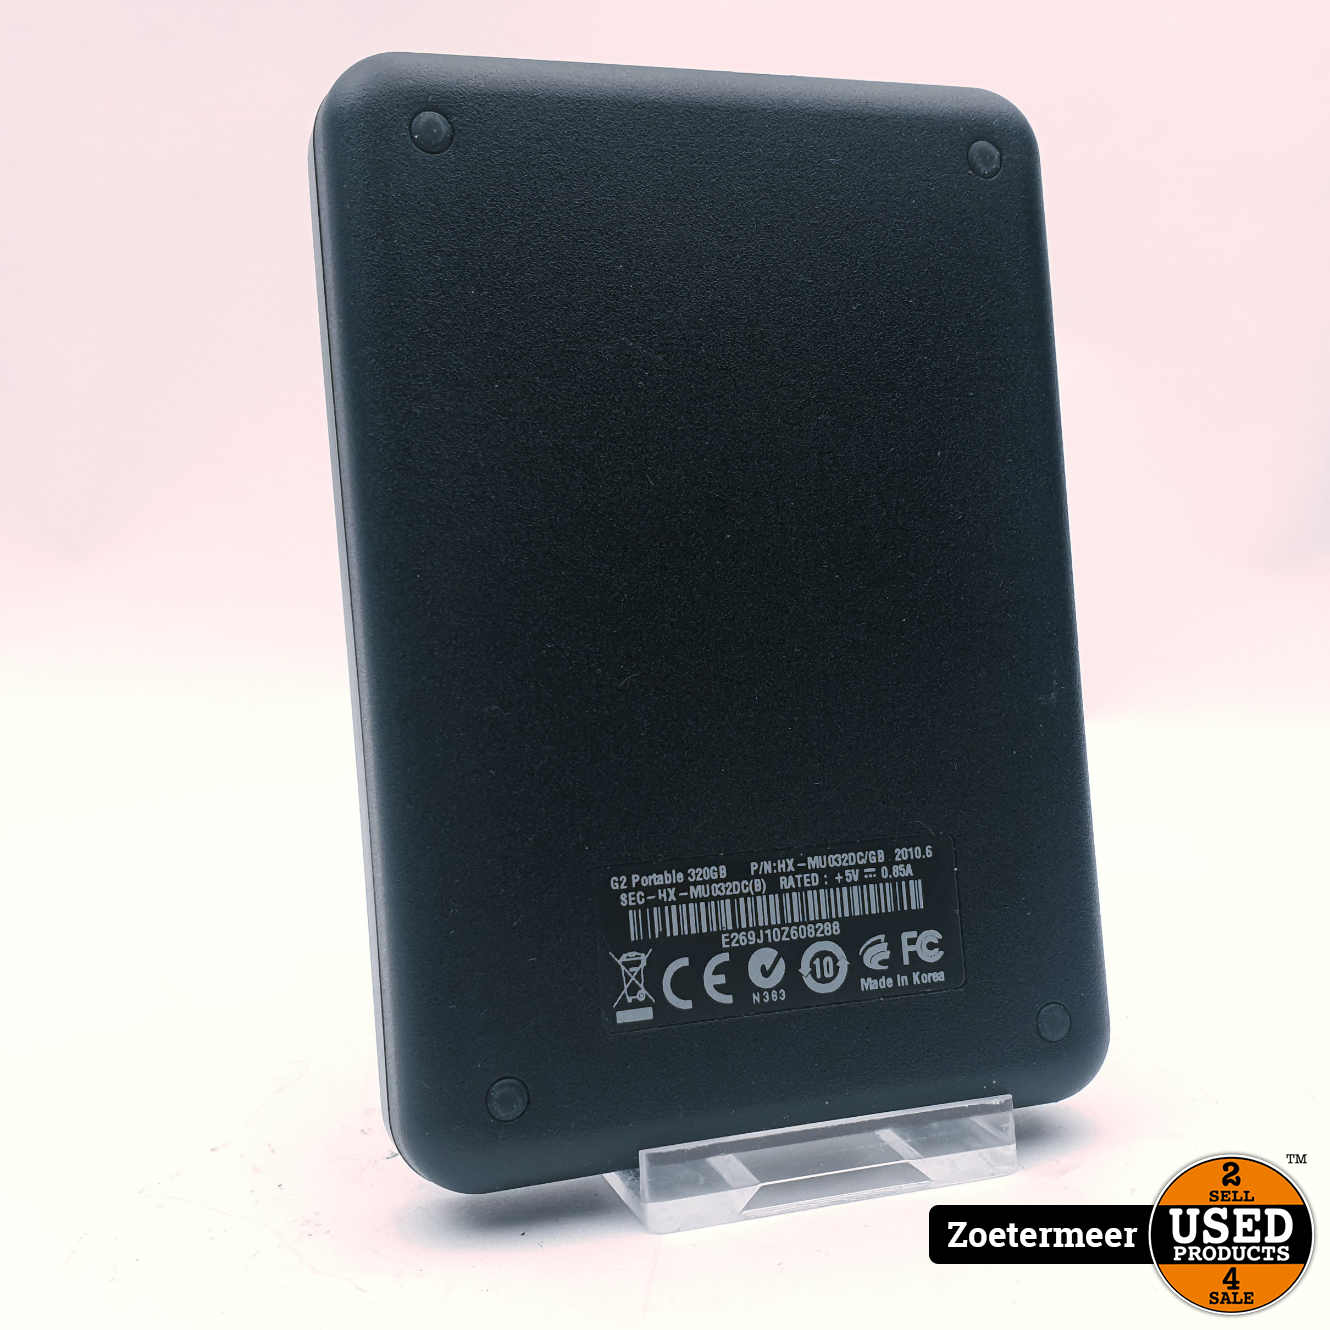 Pardon Senaat kubiek G2 Portable 320GB Externe Harde schijf - Used Products Zoetermeer